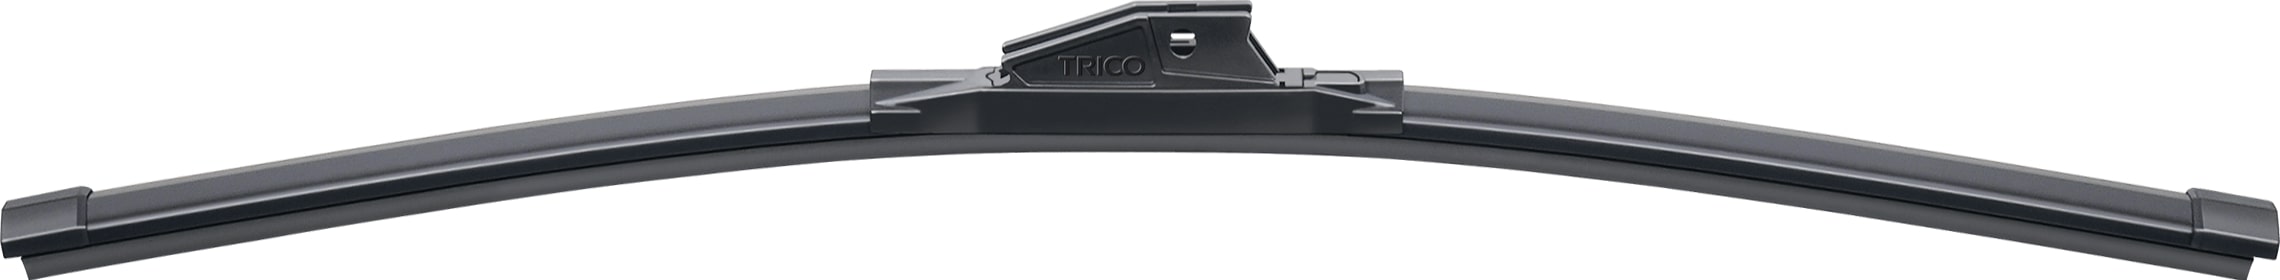 TRICO Wiper Blades - 35 Series ICE 22"